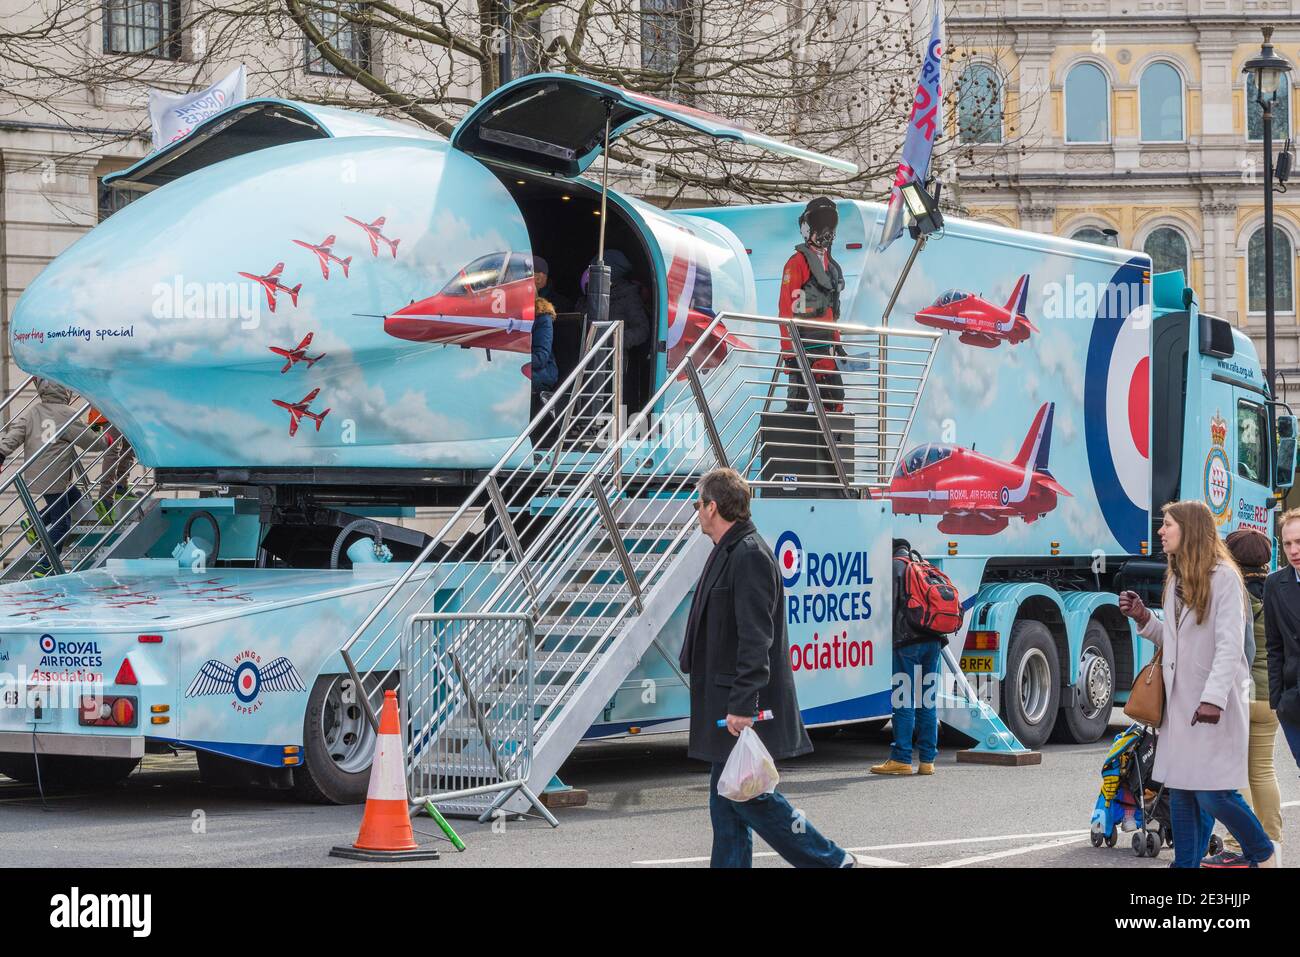 Royal Air Forces Association mobile unit in Trafalgar Square, London, England, UK Stock Photo